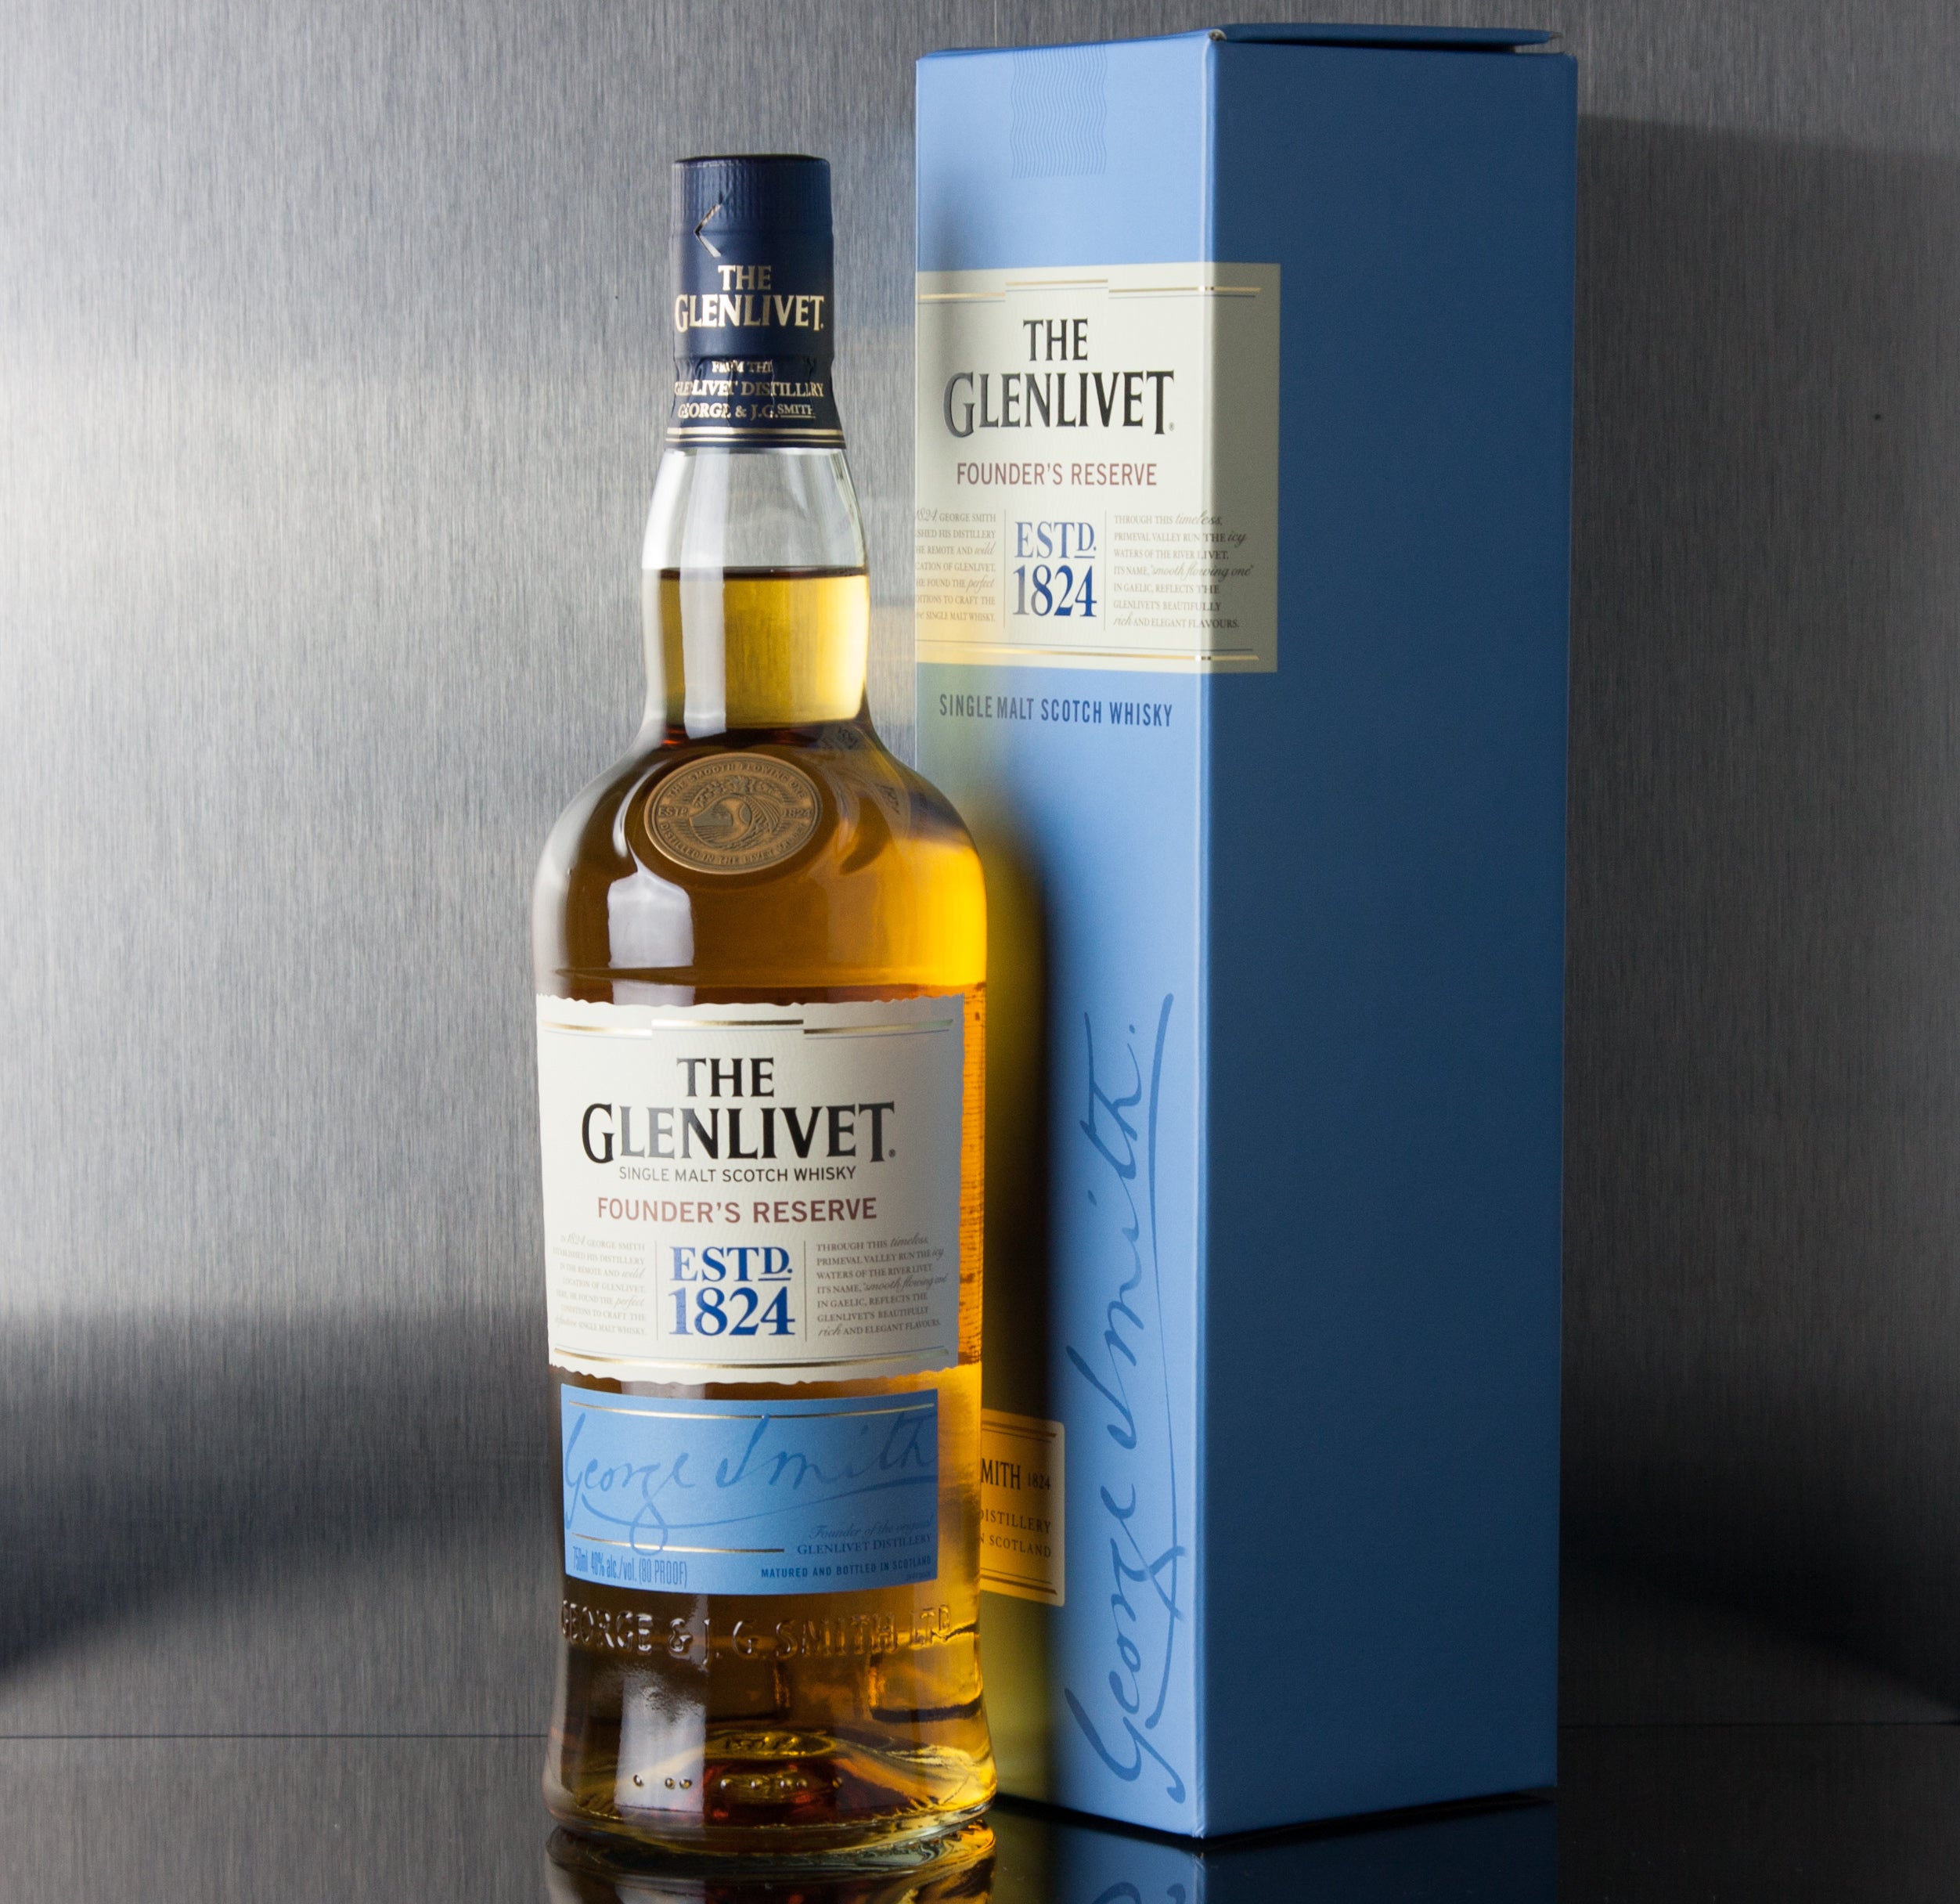 Glenfiddich 14 Year Old Scotch Whiskey 750ml – Uptown Spirits